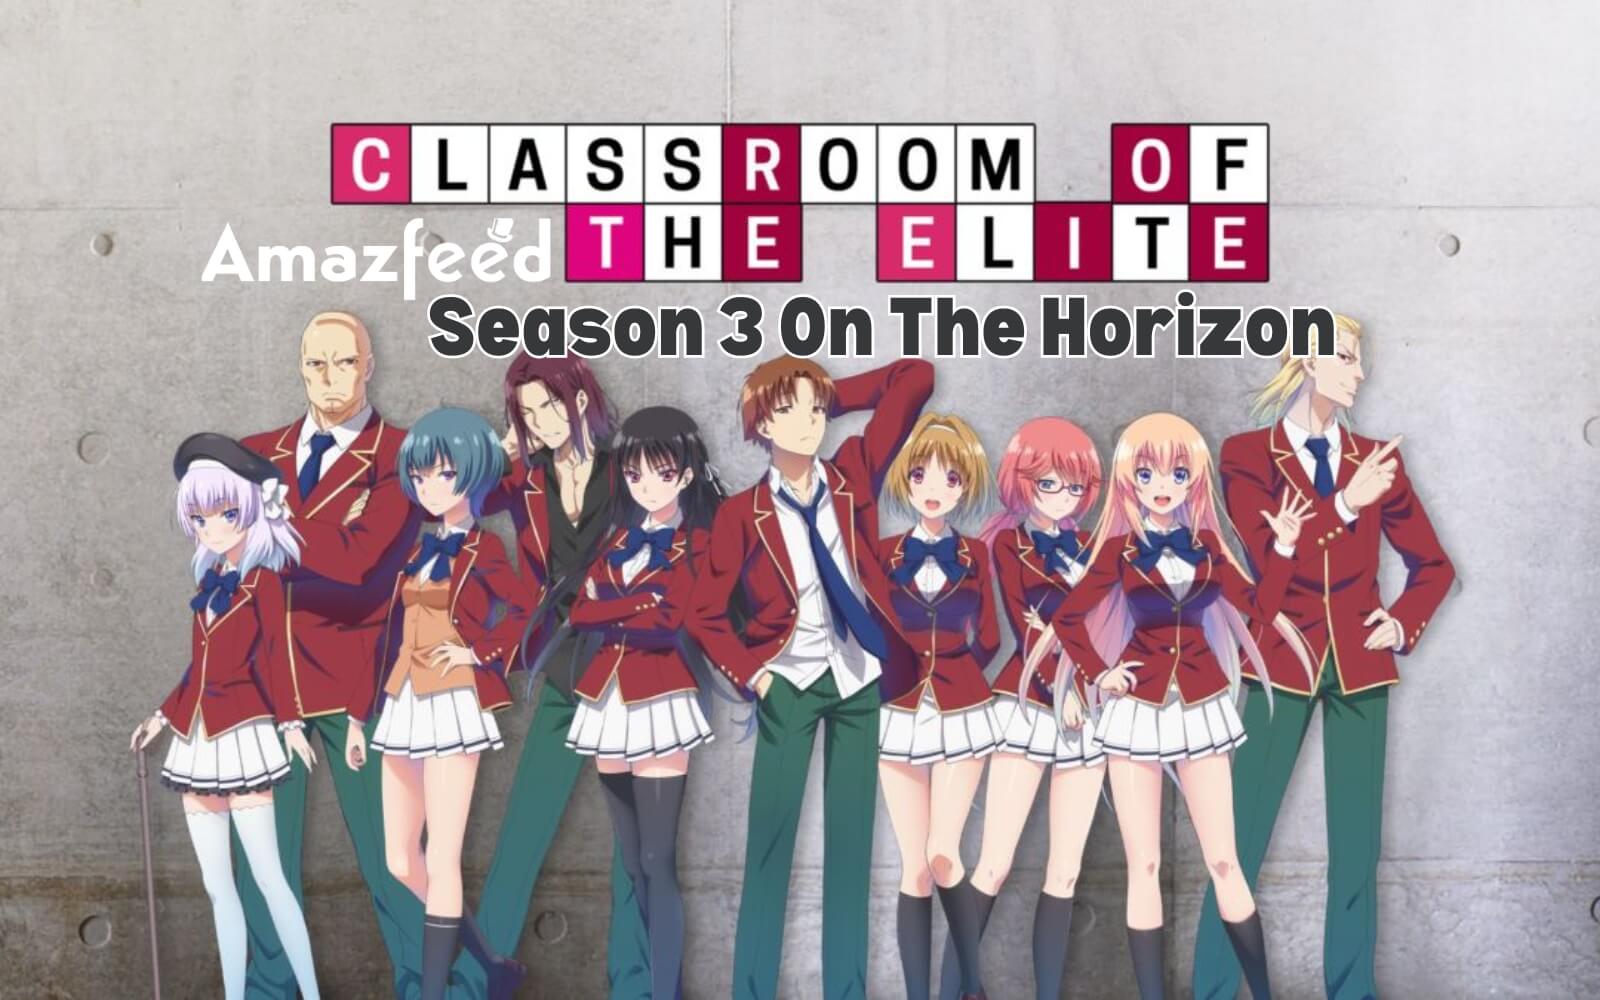 Classroom of the Elite Season 3 release